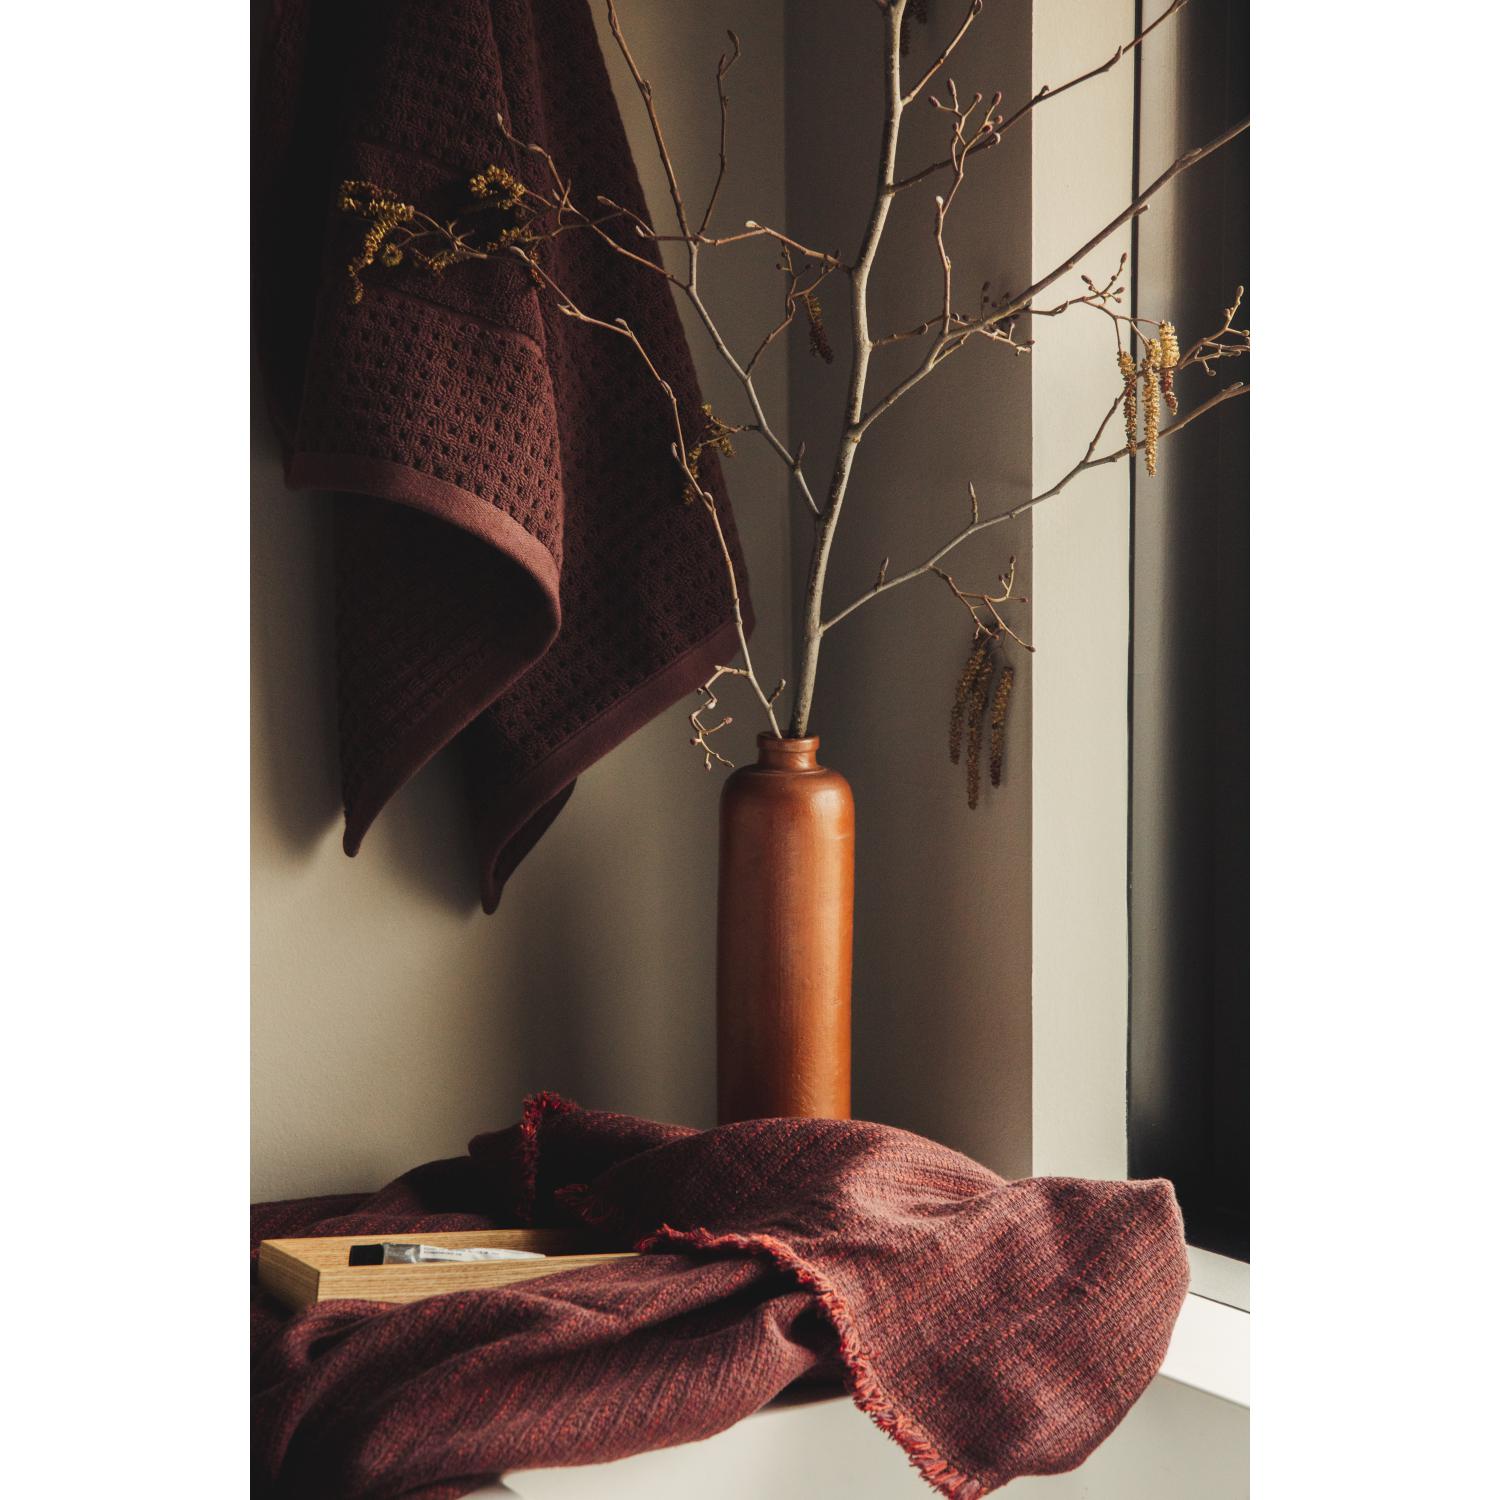 Juna Reflektionshåndklædechokolade, 90x180 cm